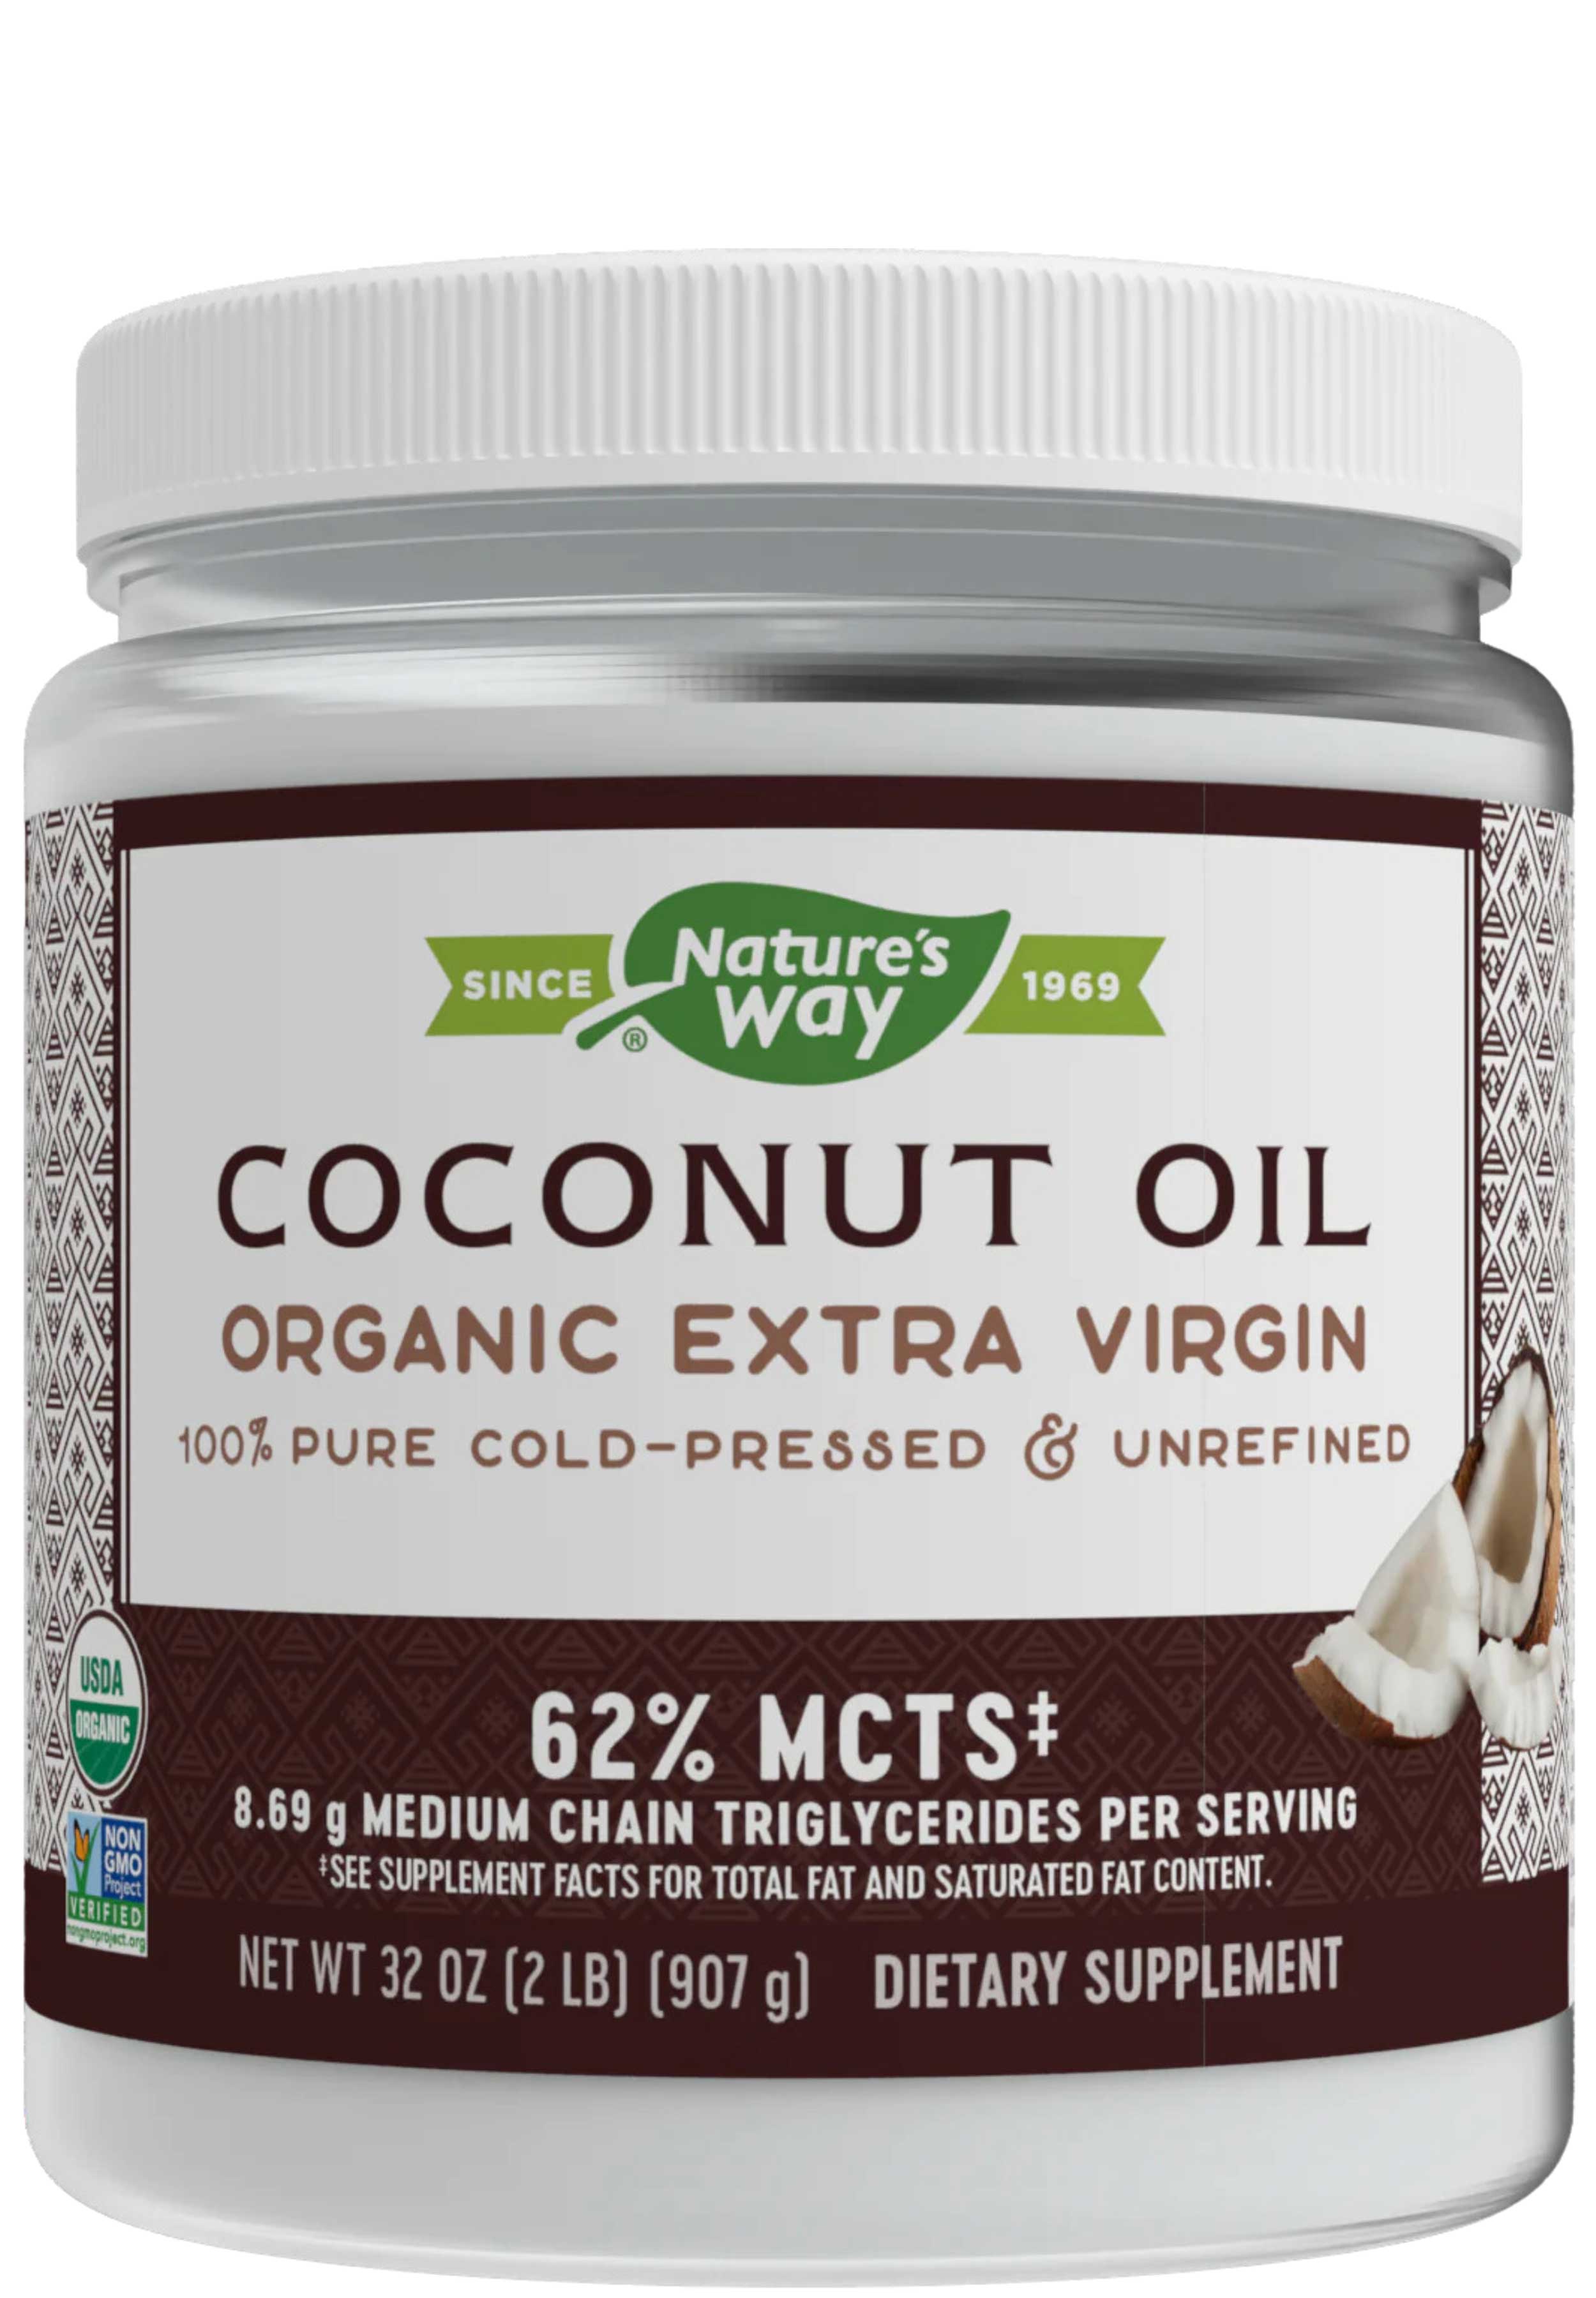 Nature's Way Coconut Oil Organic Extra Virgin Ingredients